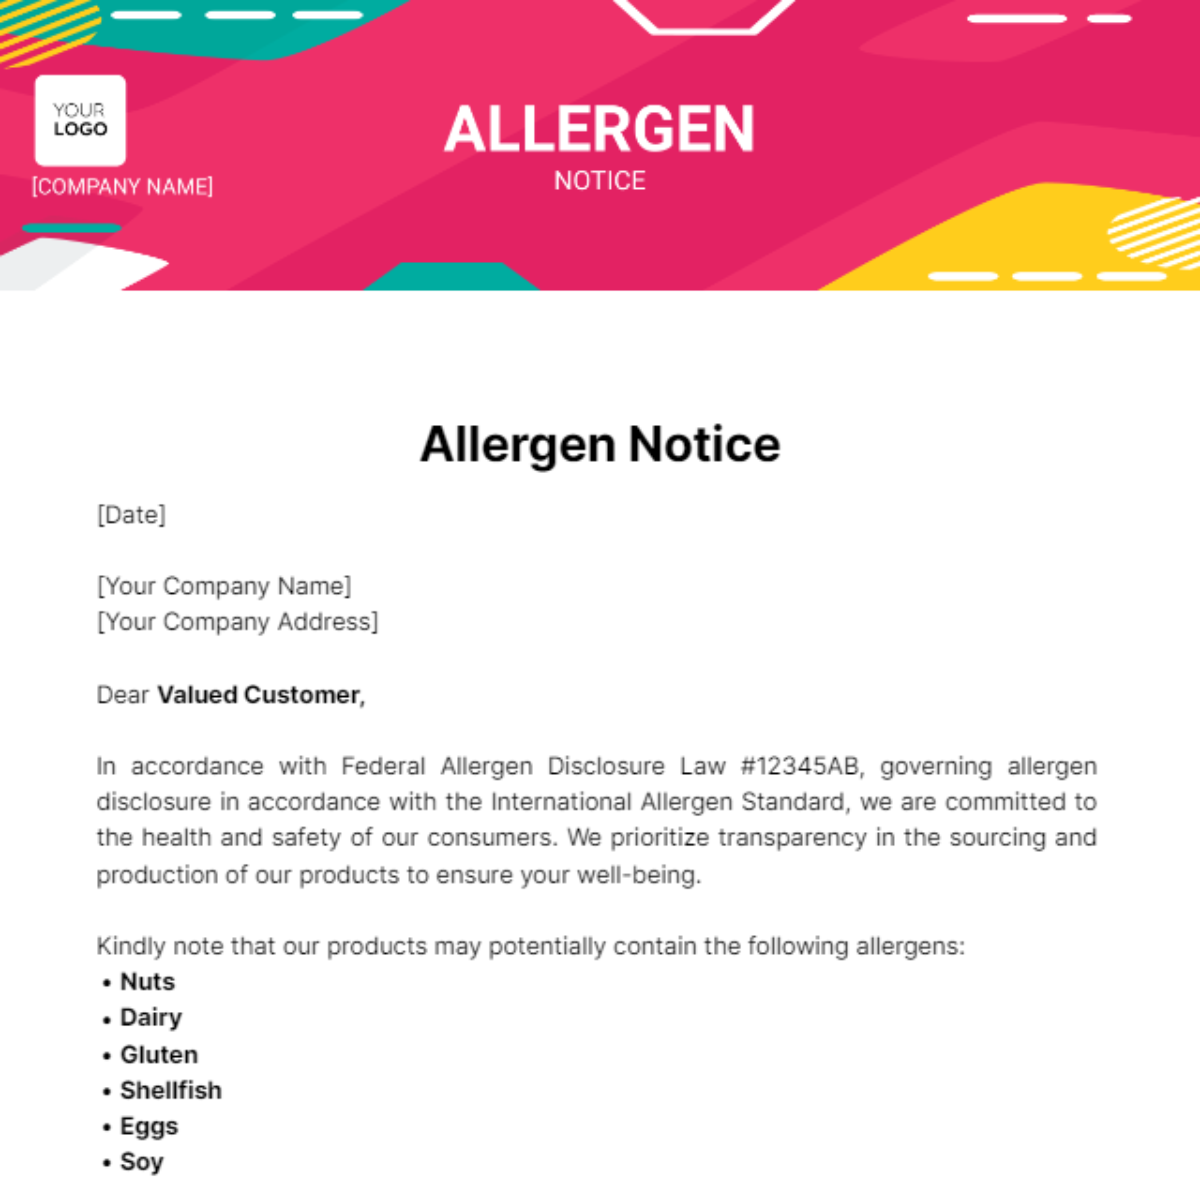 Allergen Notice Template